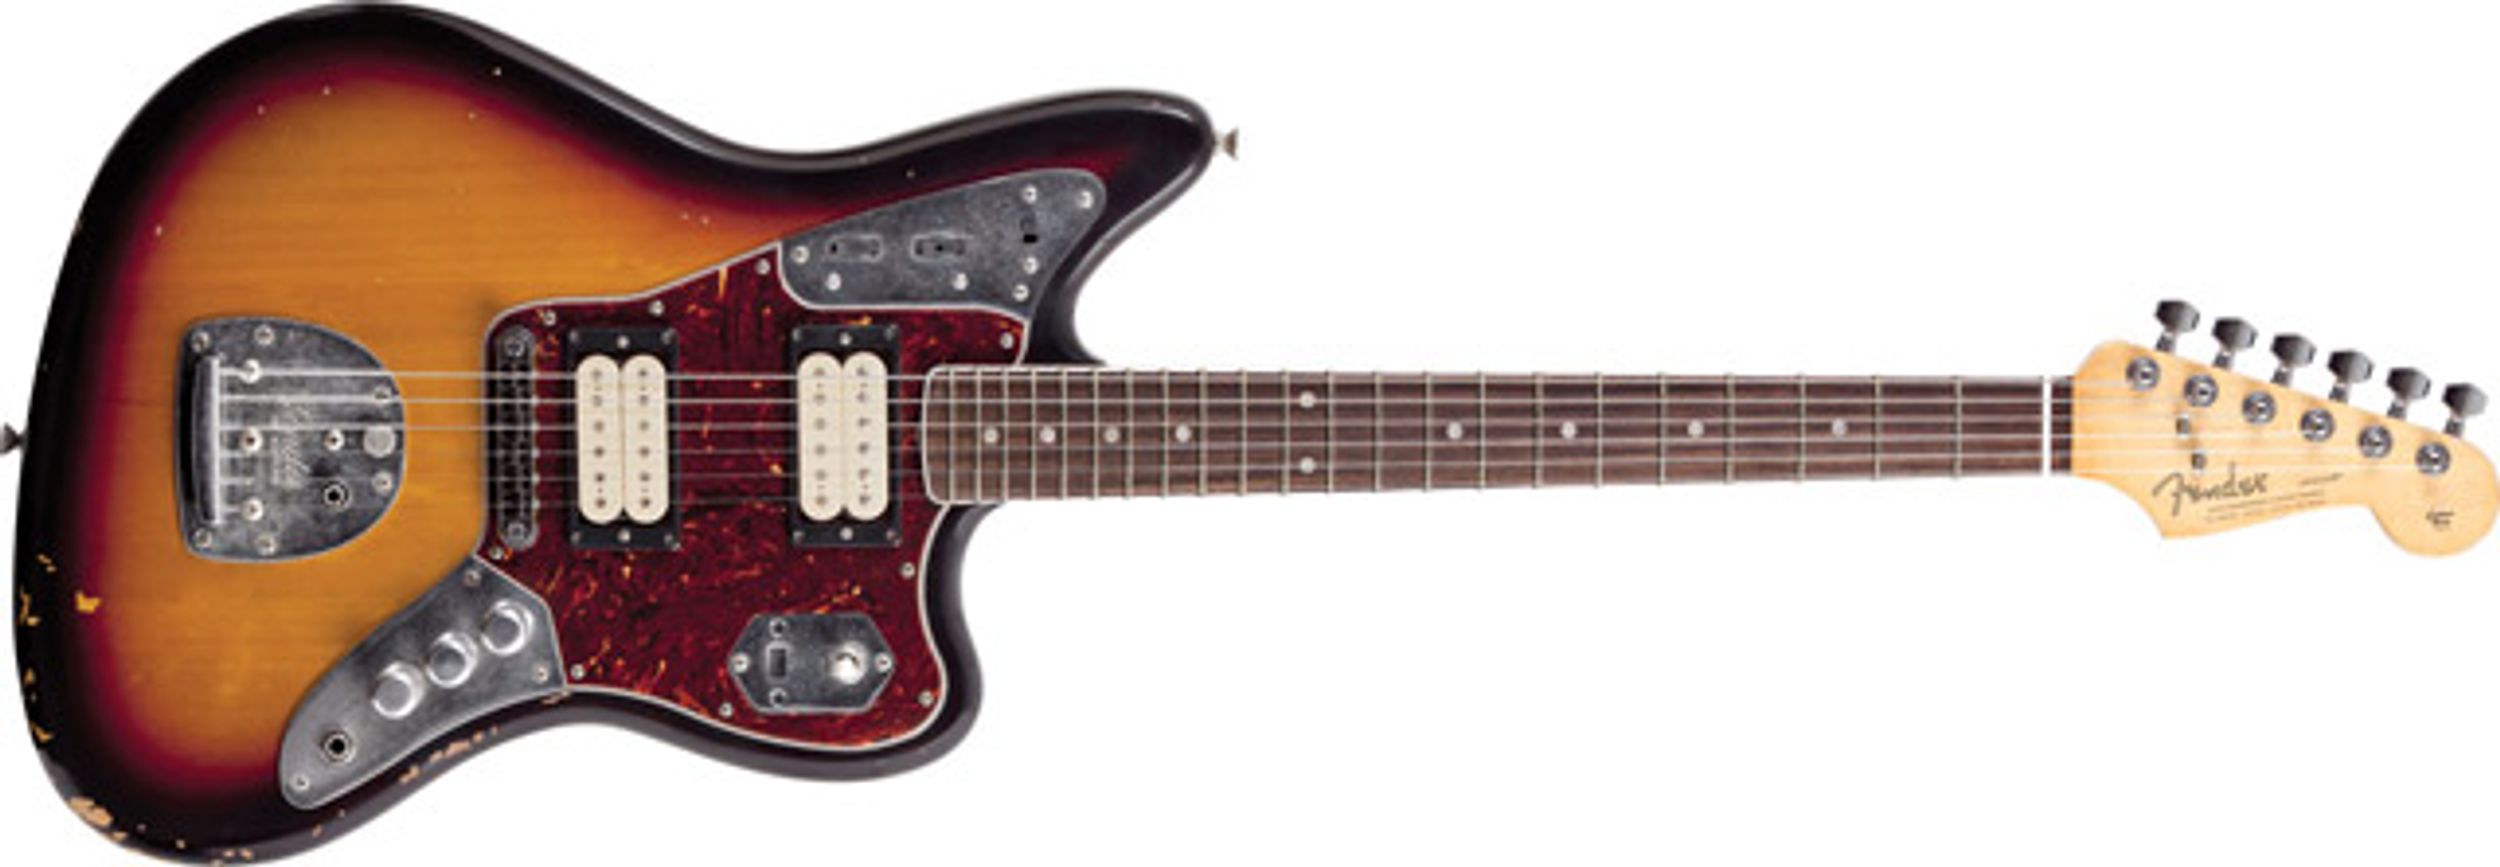 Fender Announces Kurt Cobain Jaguar Guitar